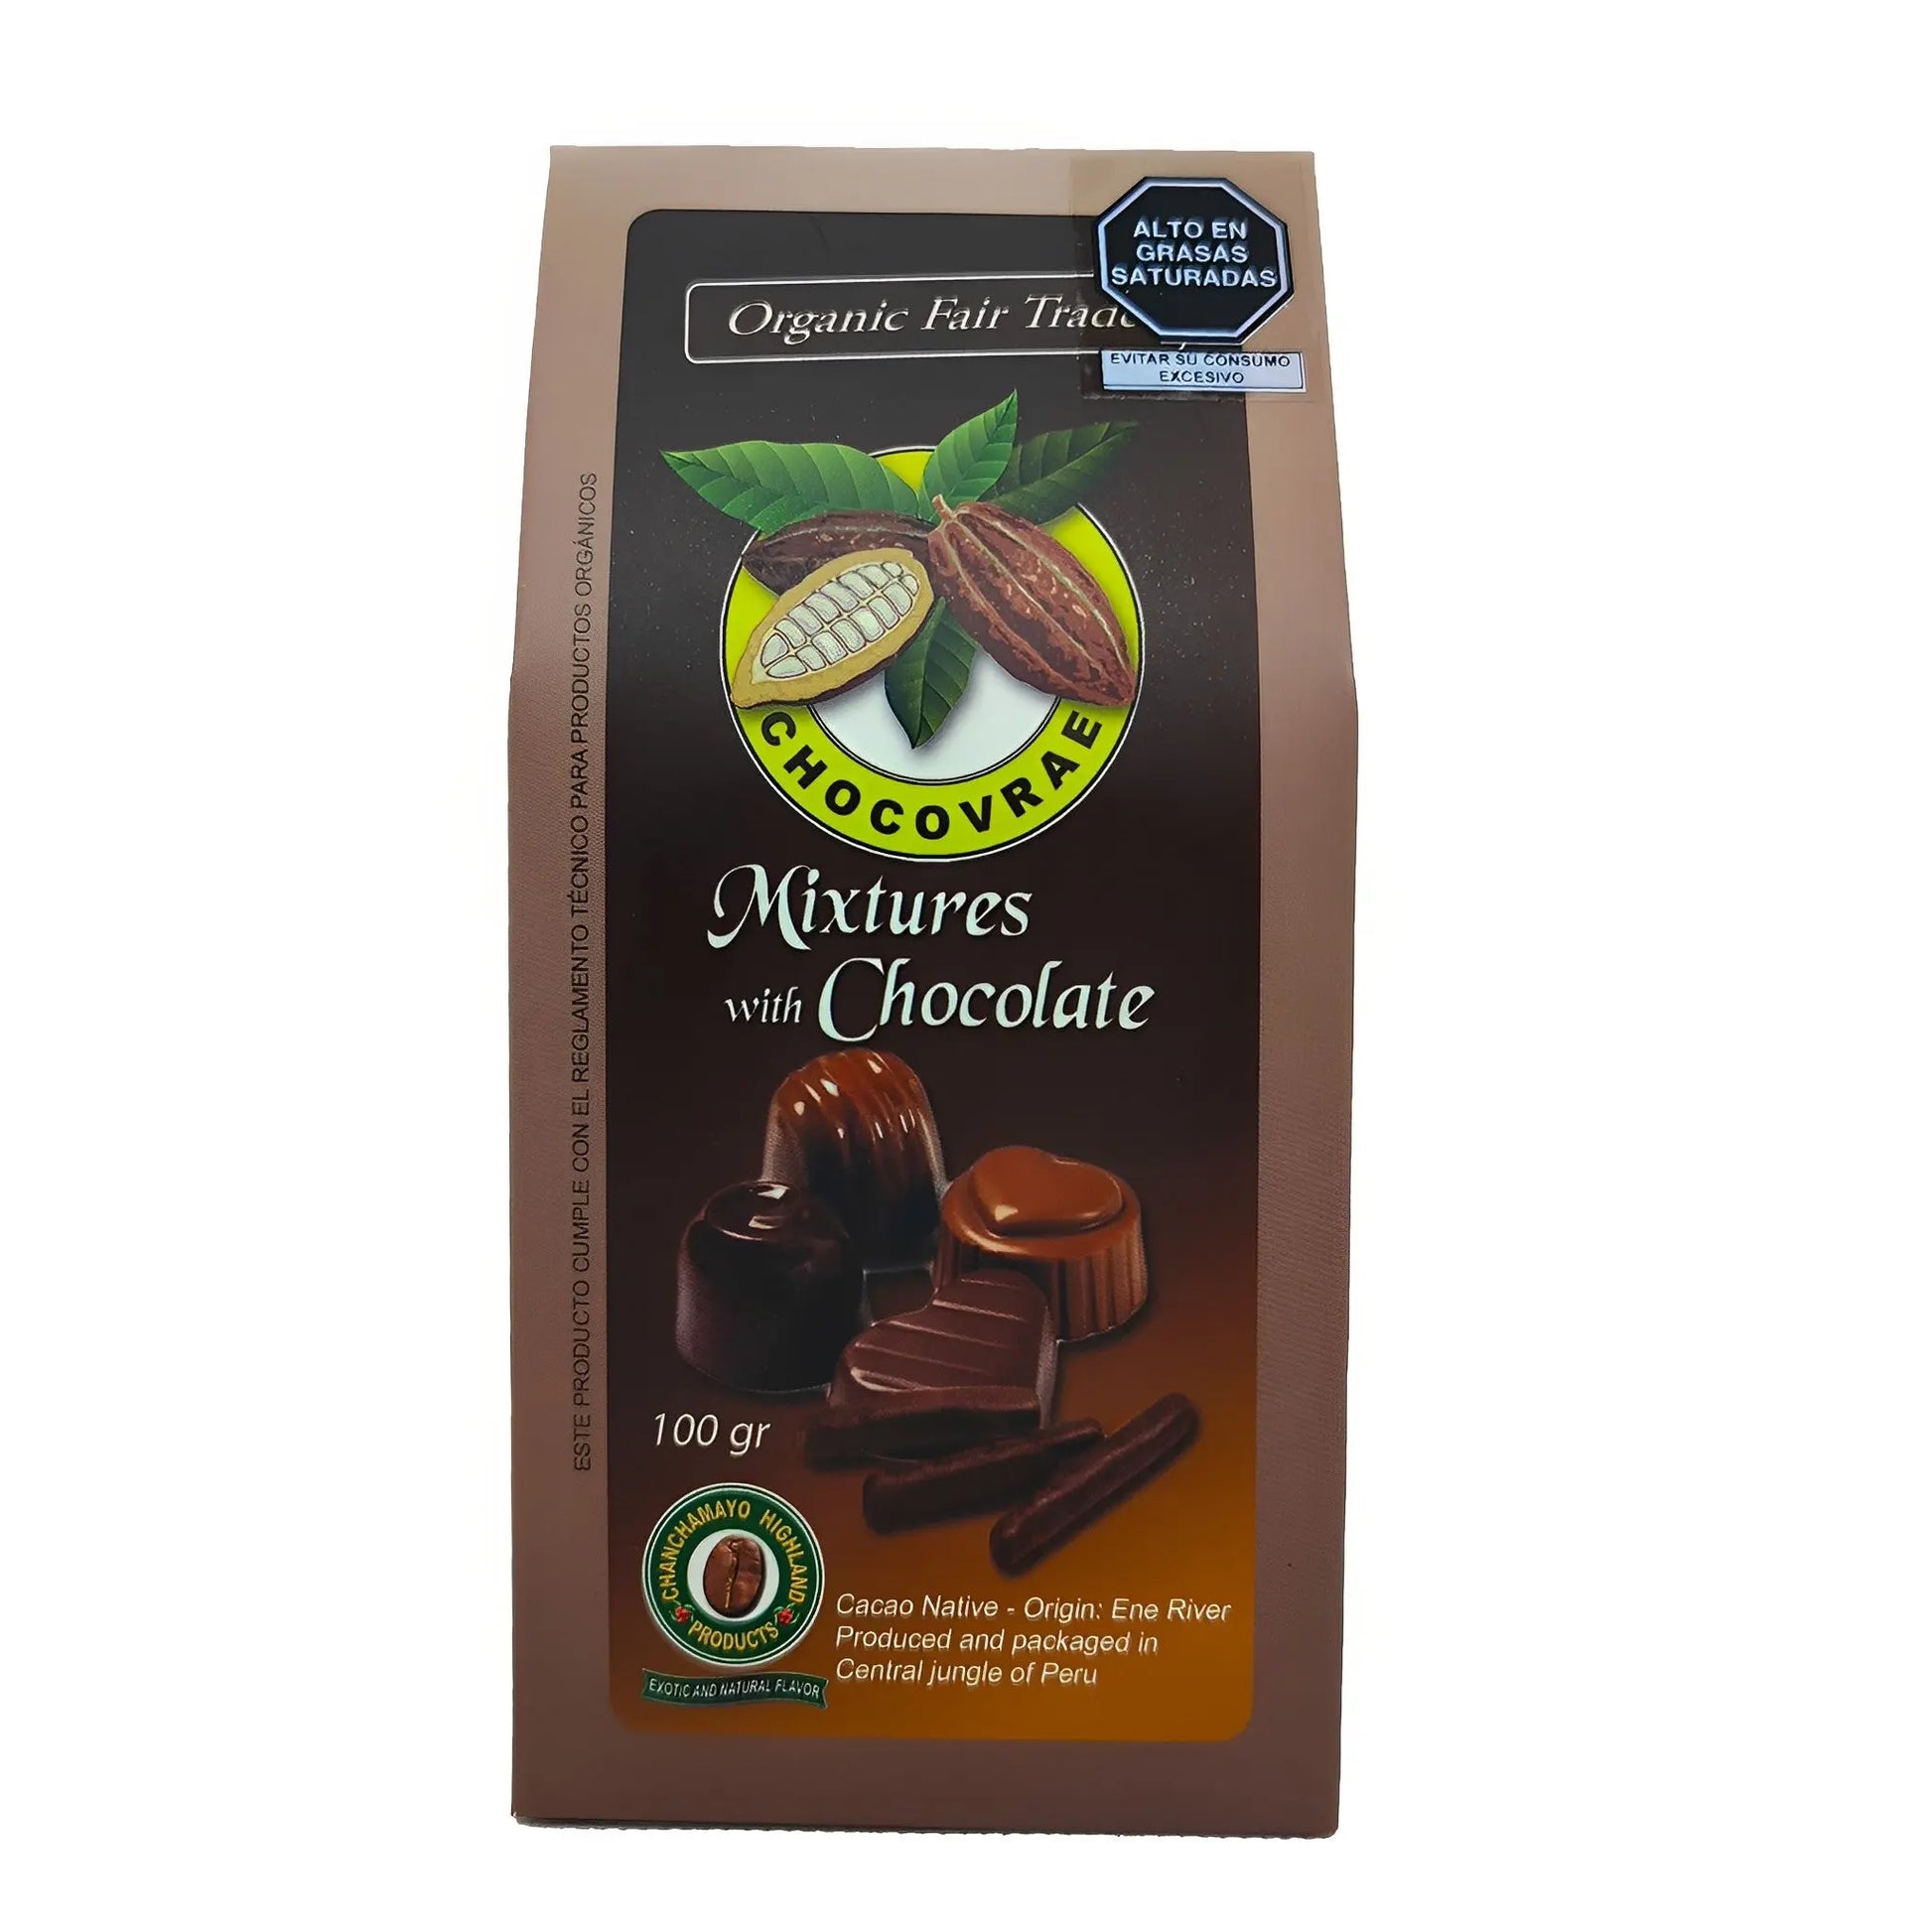 Chocolate mixtura orgánico, caja x100 gr Chanchamayo Highland Coffee